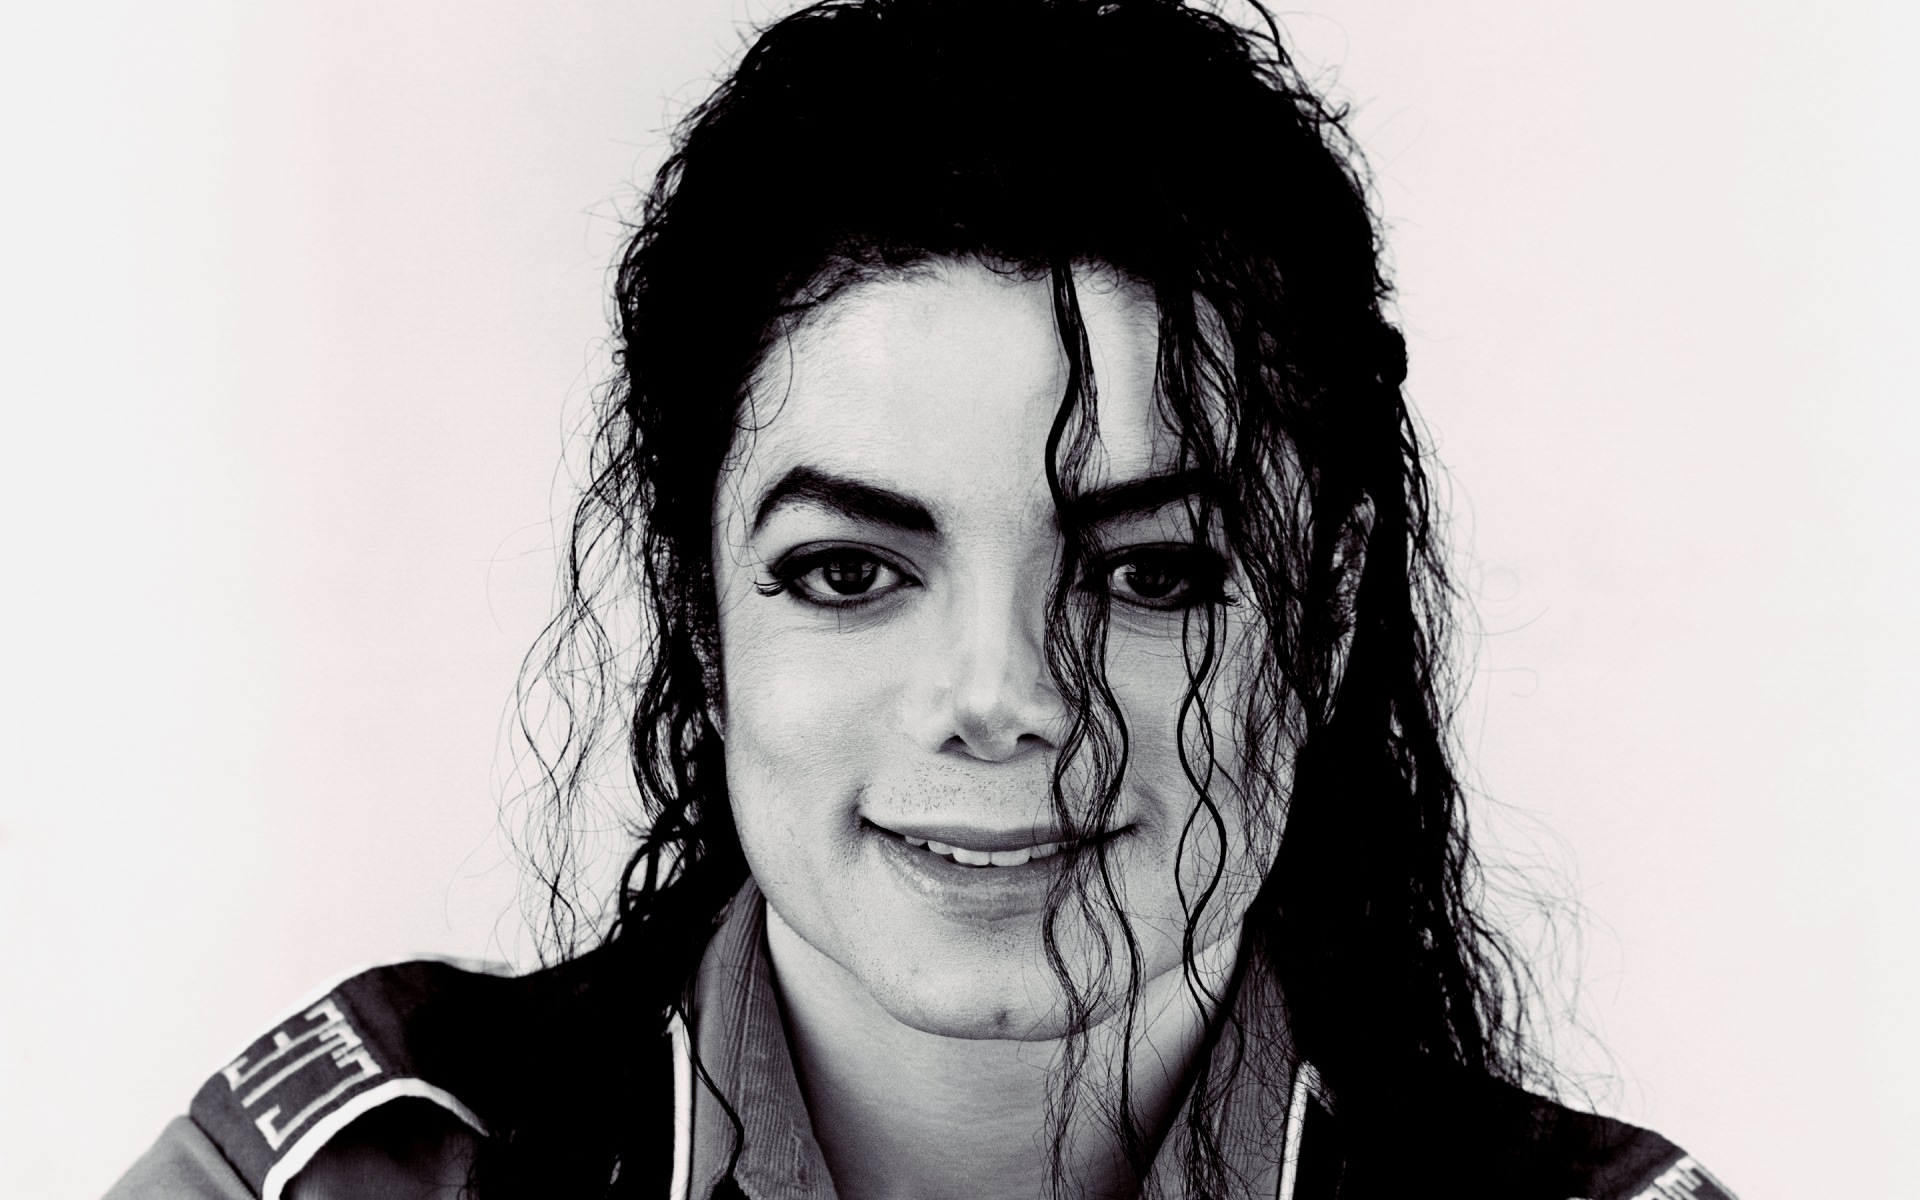 Michael Jackson Wallpaper HD Background Image Pics Photos